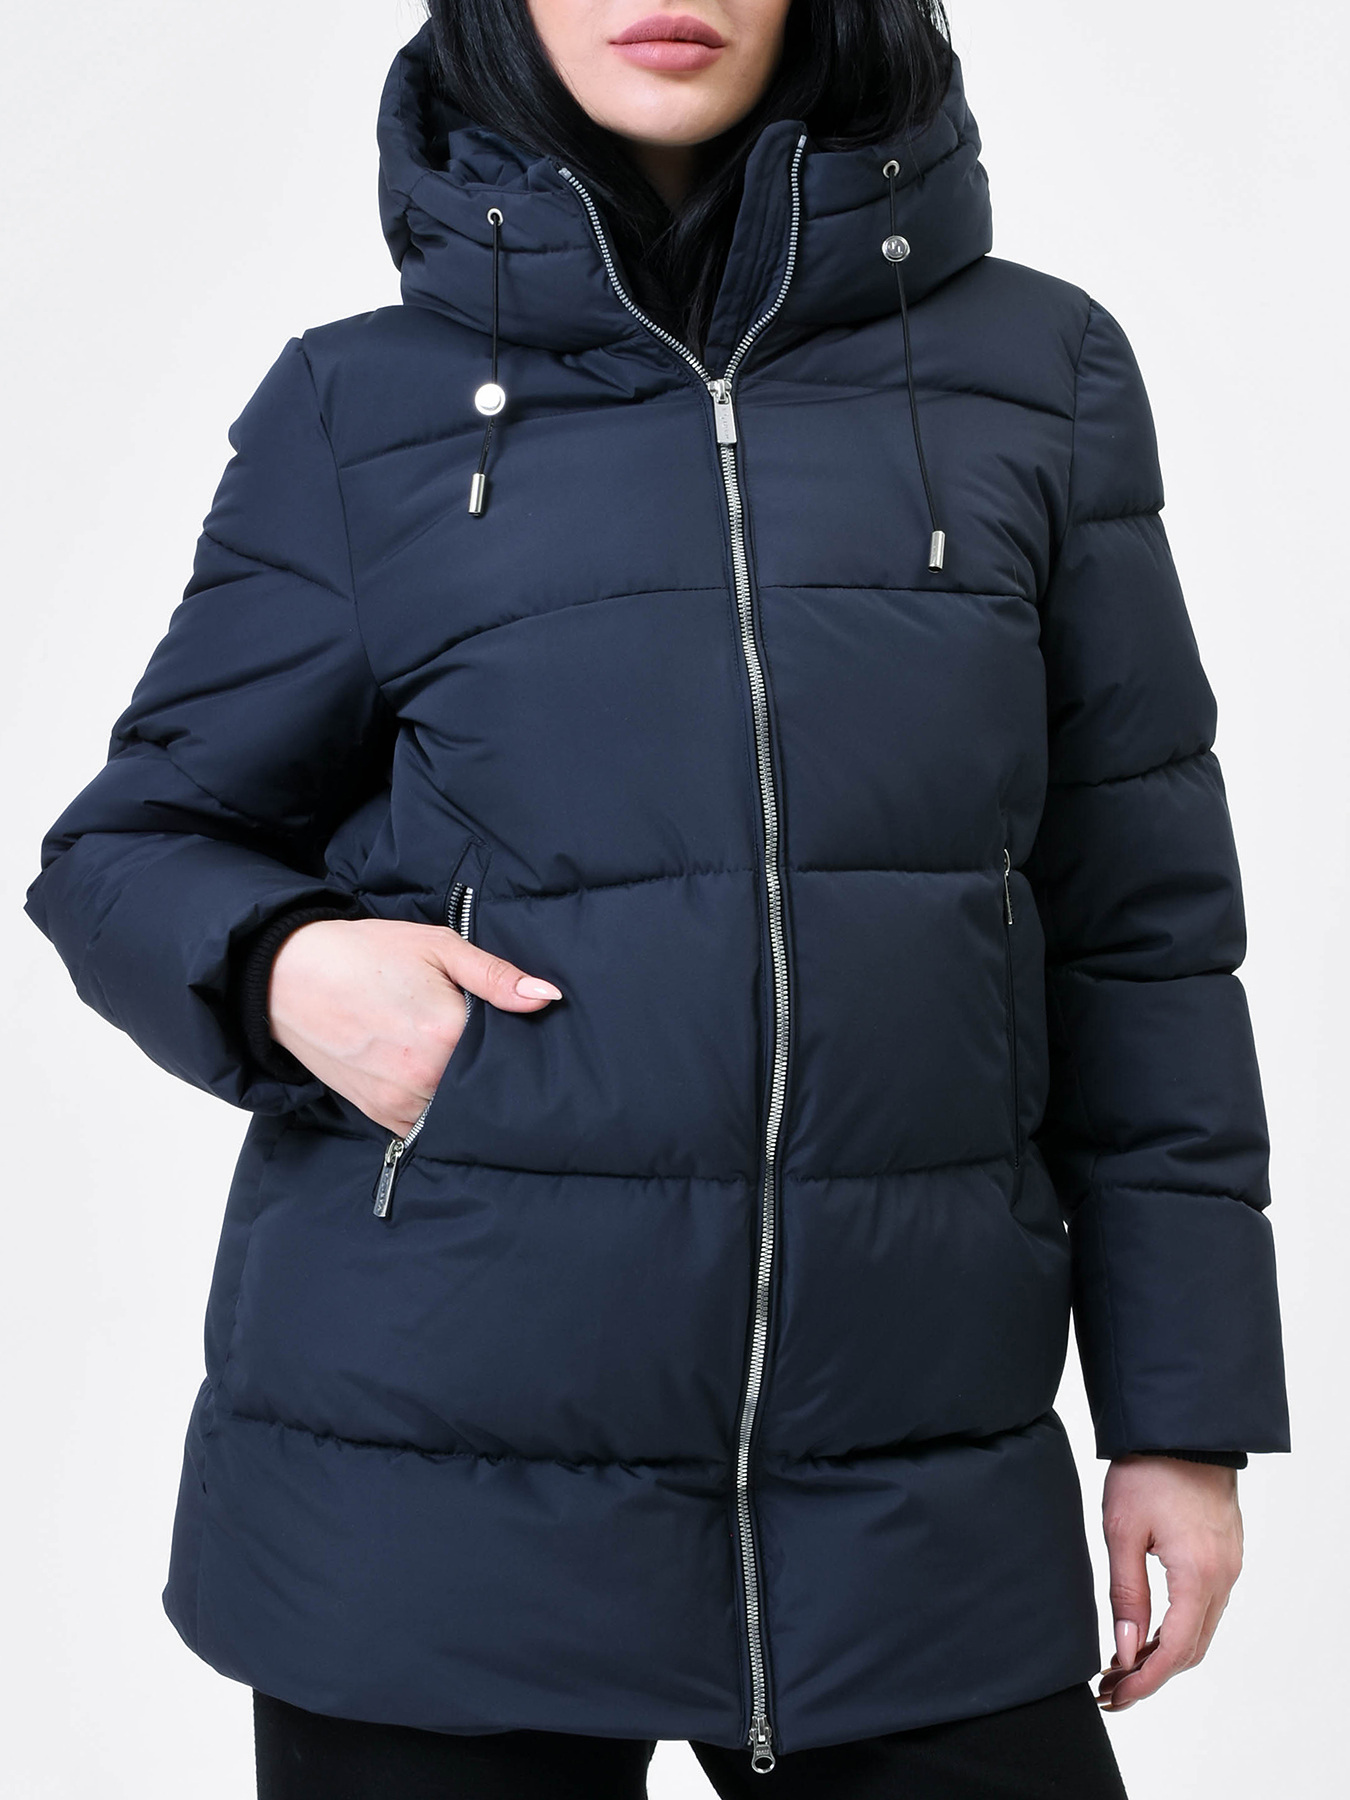 Пальто зимнее Maritta 433612-020, цвет темно-синий, размер 44 - фото 1